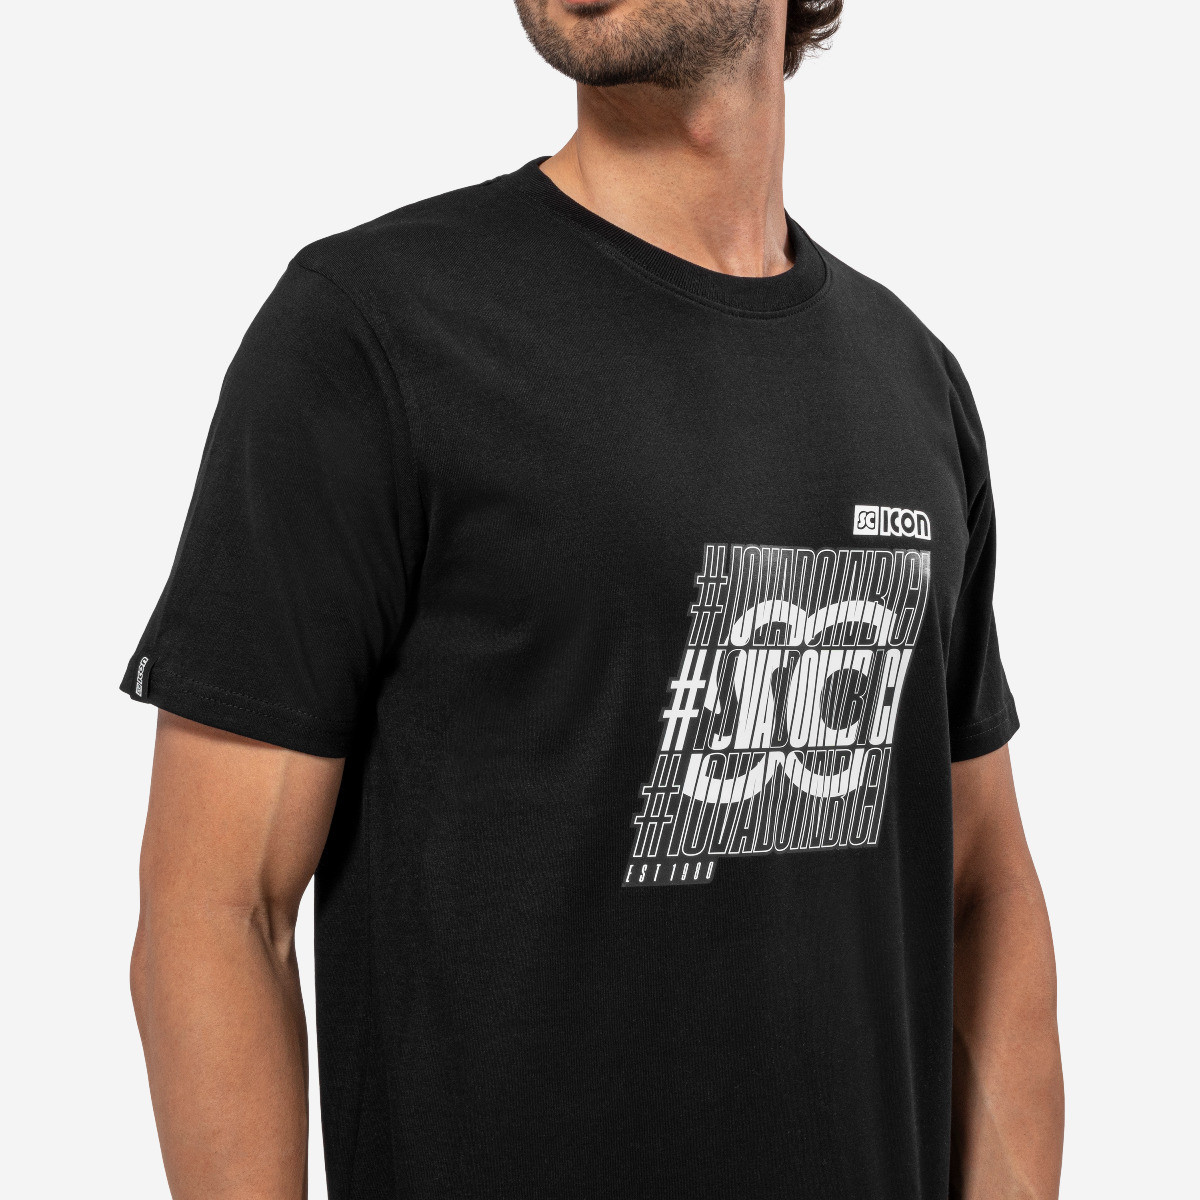 Scicon Sports | SC #IOVADOINBICI Logo Lifestyle Cotton T-shirt - Black - TS61862